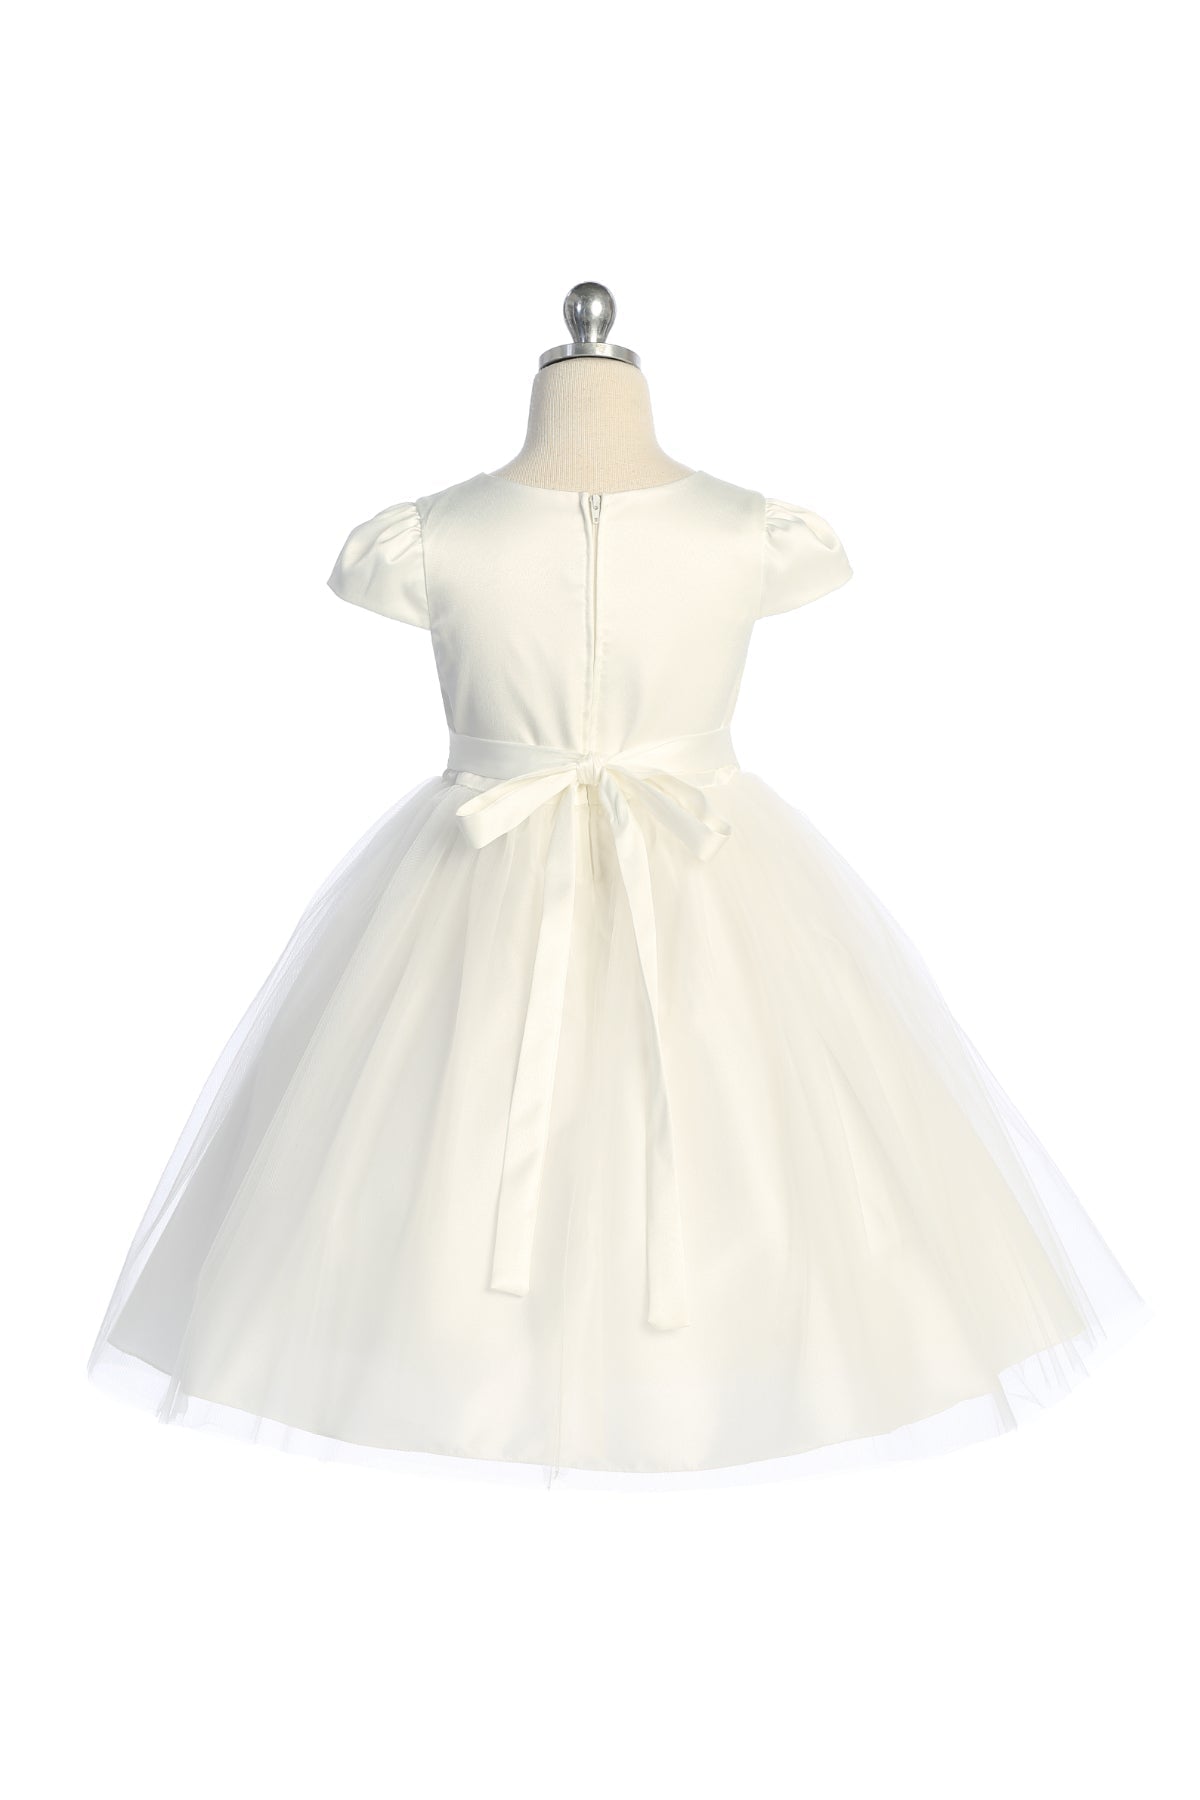 Dress - Capped Sleeve Satin & Tulle Plus Size Dress With Diamond Shaped Rhinestone Trim